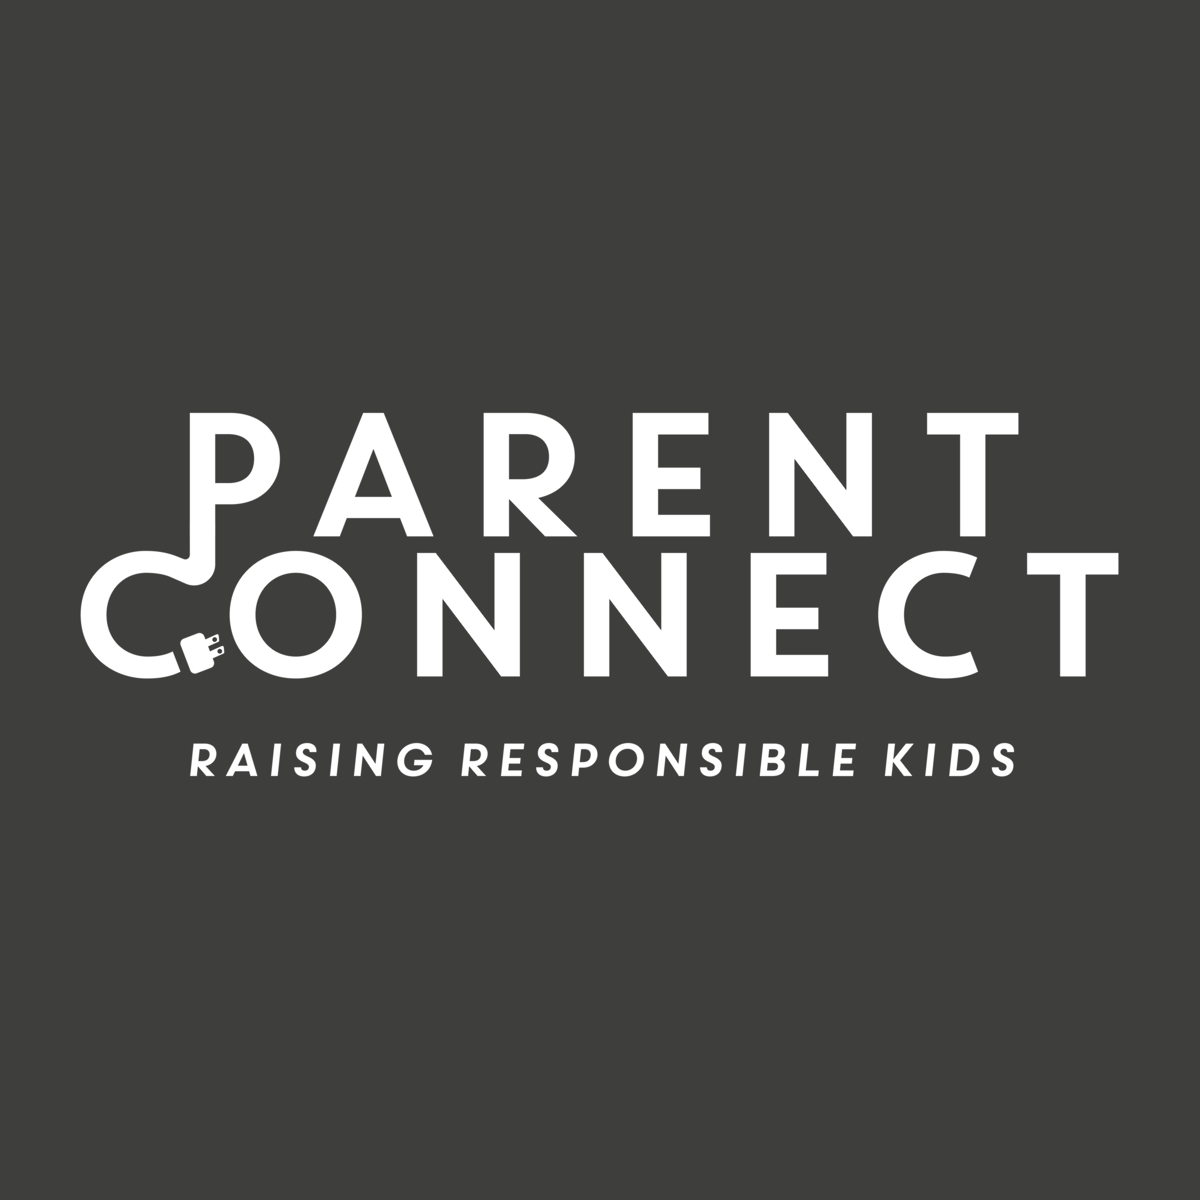 Raising Responsible Kids